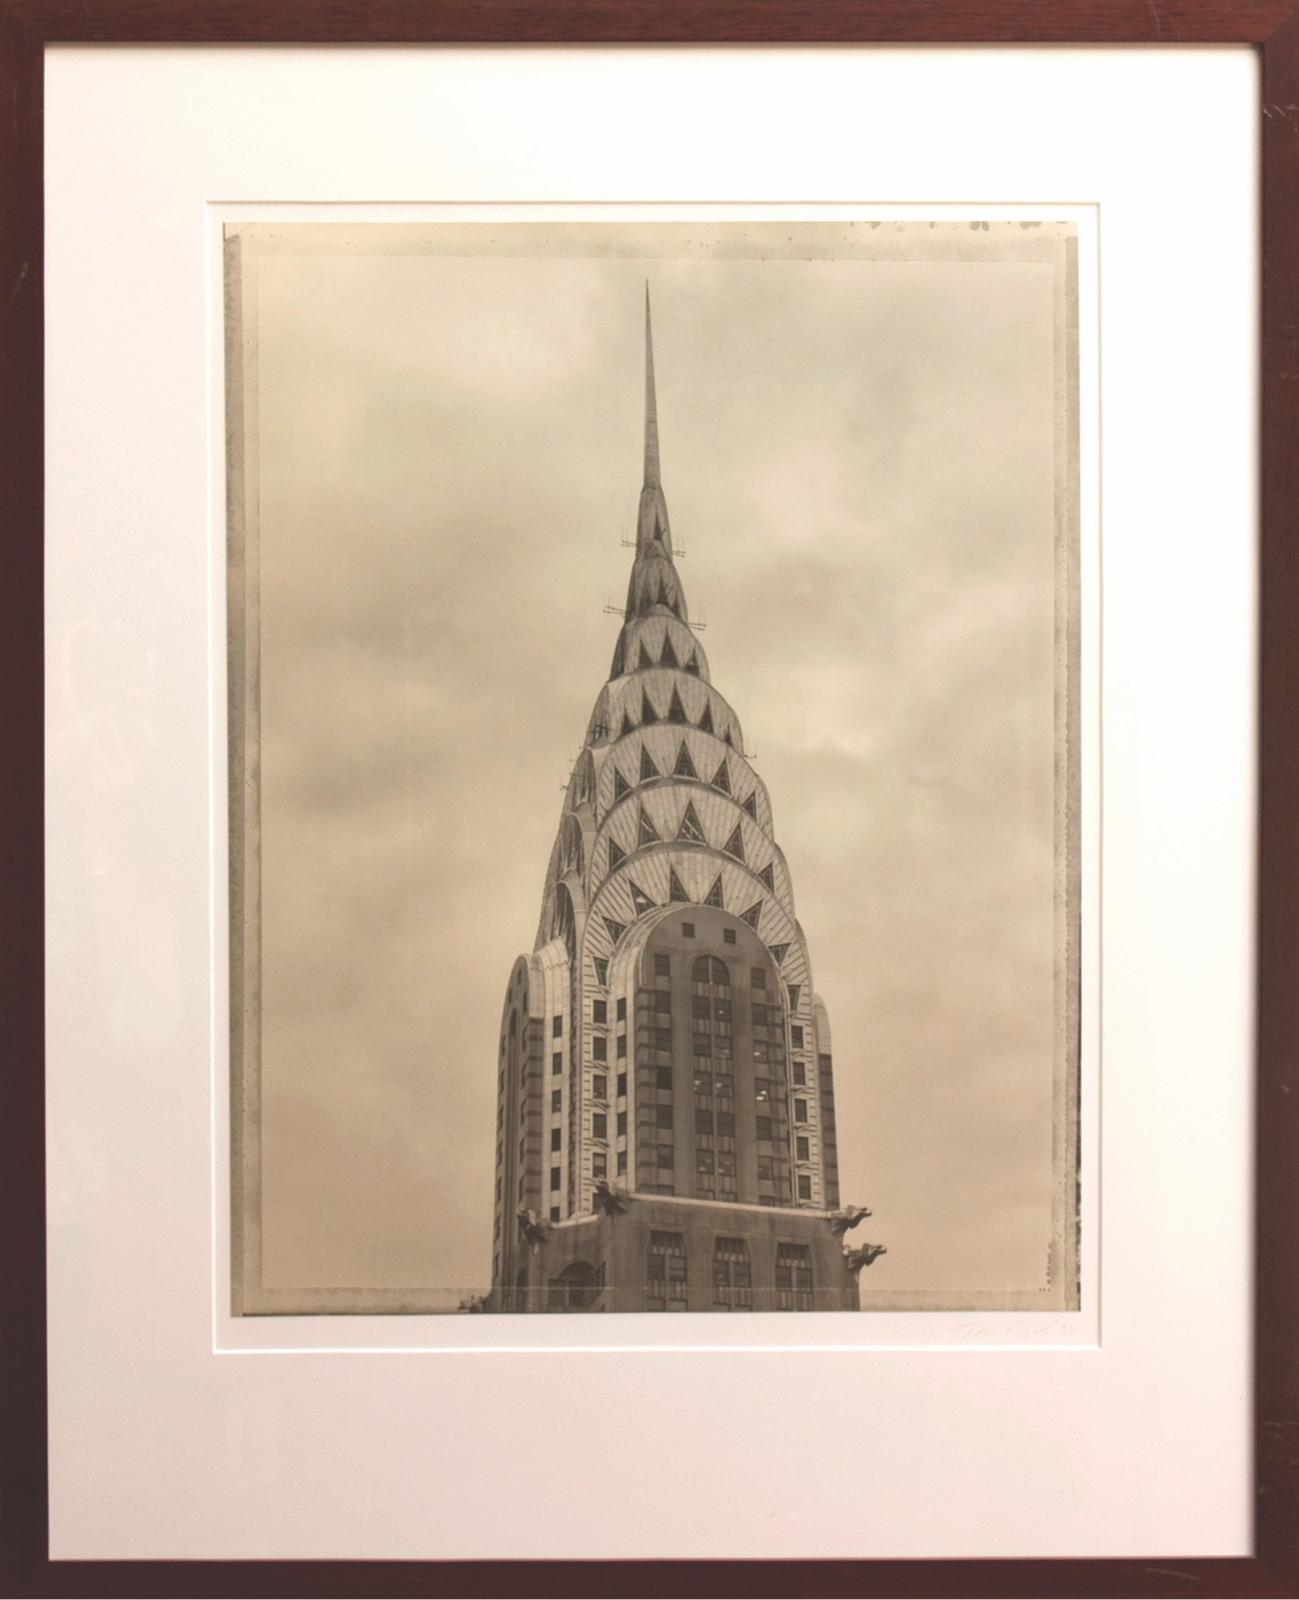 Tom Baril, Chrysler Building, created 1997, printed 1998